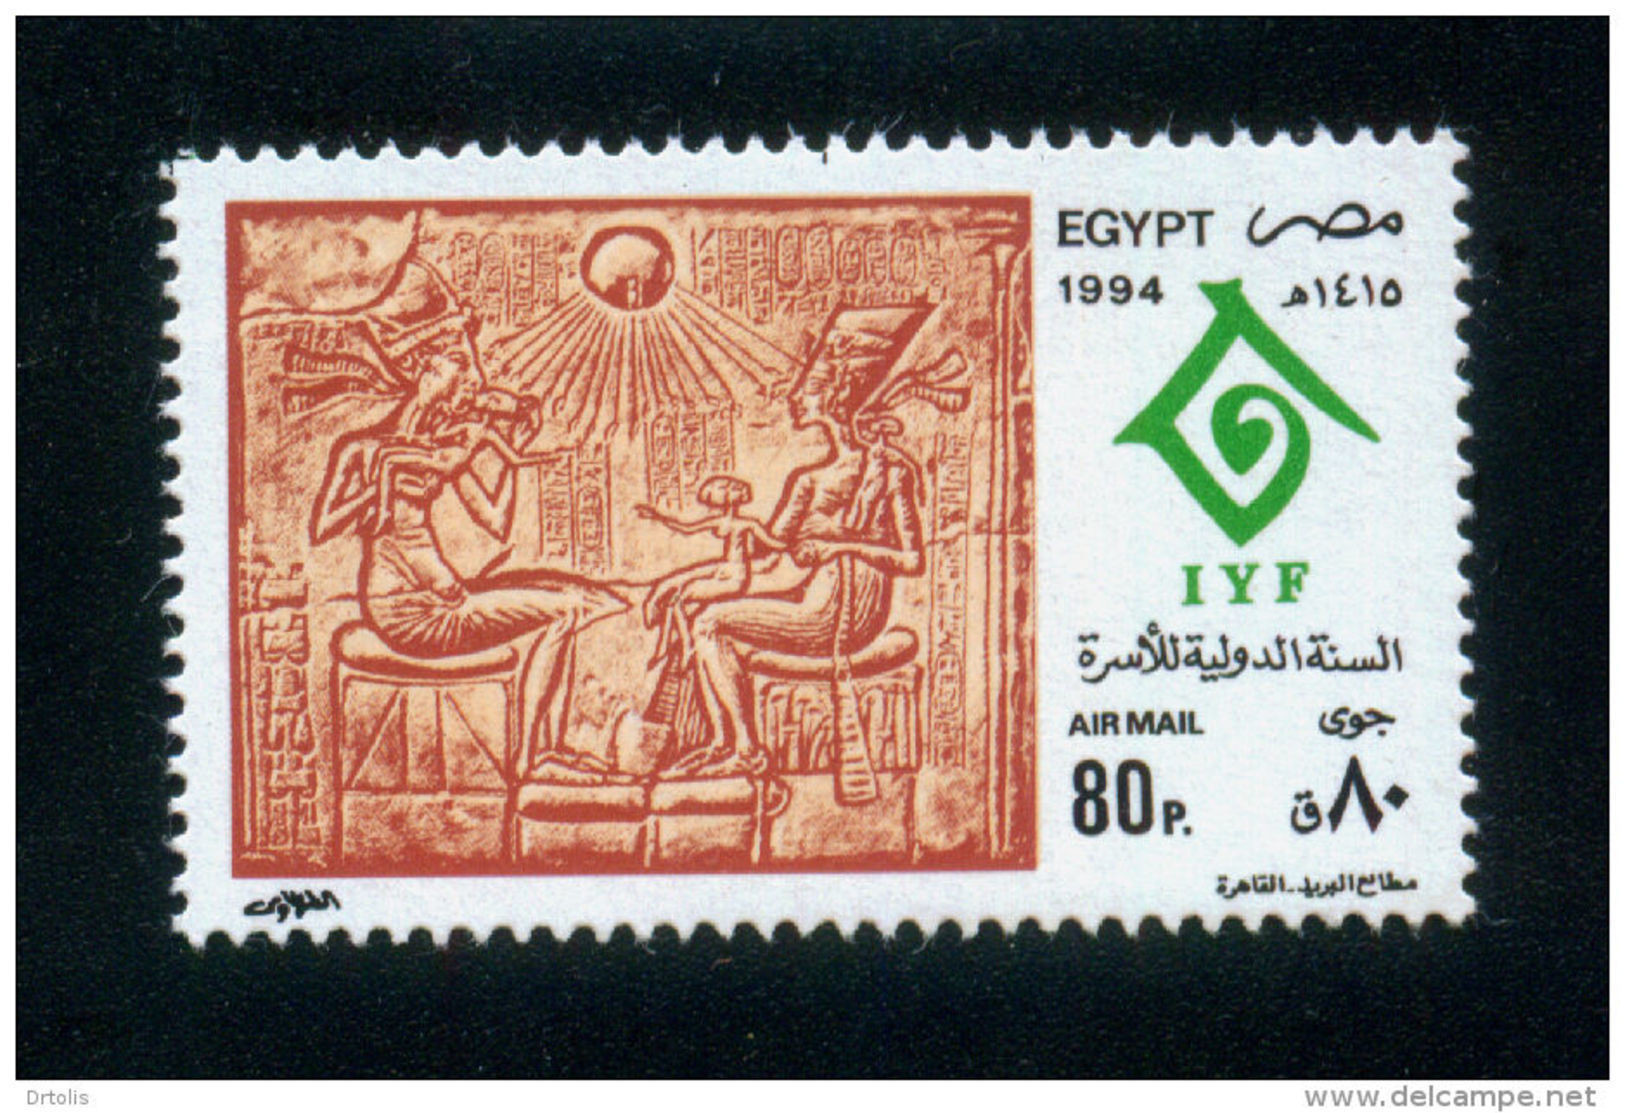 EGYPT / 1994 / UN / UN'S DAY / IYF/ INTL YEAR OF THE FAMILY / EGYPTOLOGY / AKHENATEN ; NEFERTITI & CHILDREN / MNH / VF - Ungebraucht